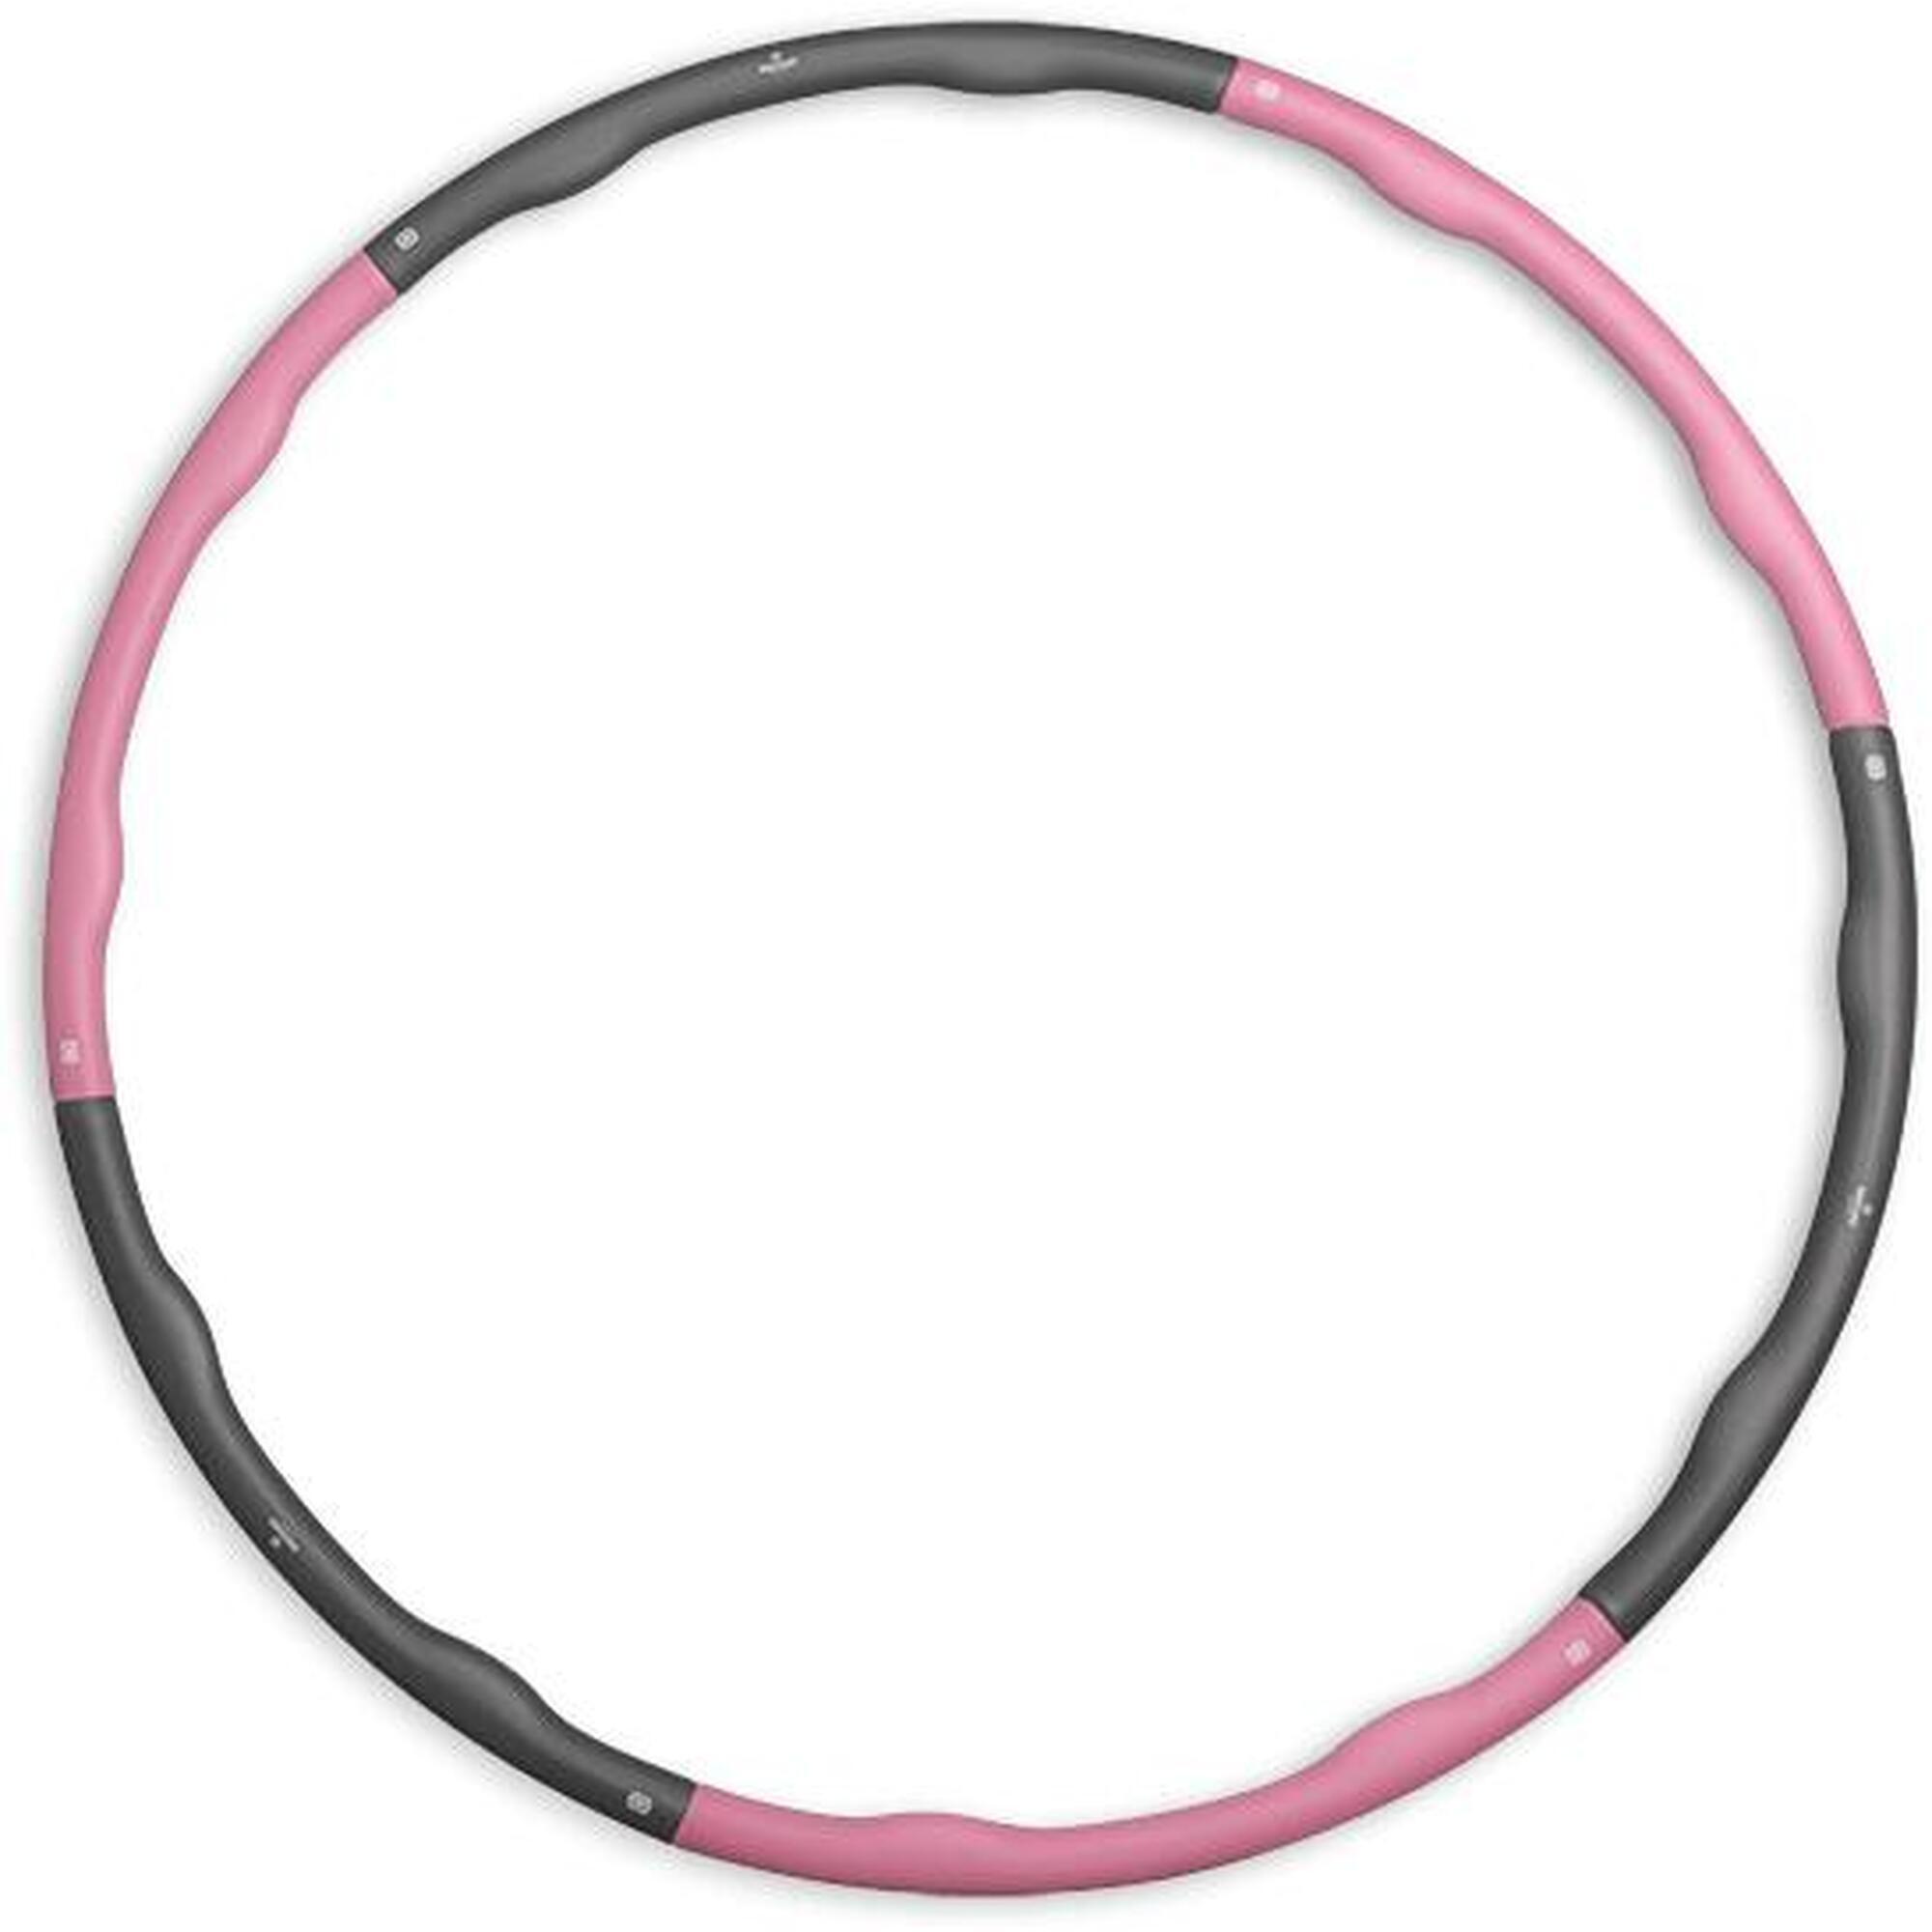 Fitness hula hoop - Aro - 1,5kg - Rosa/gris - Ø 100cm